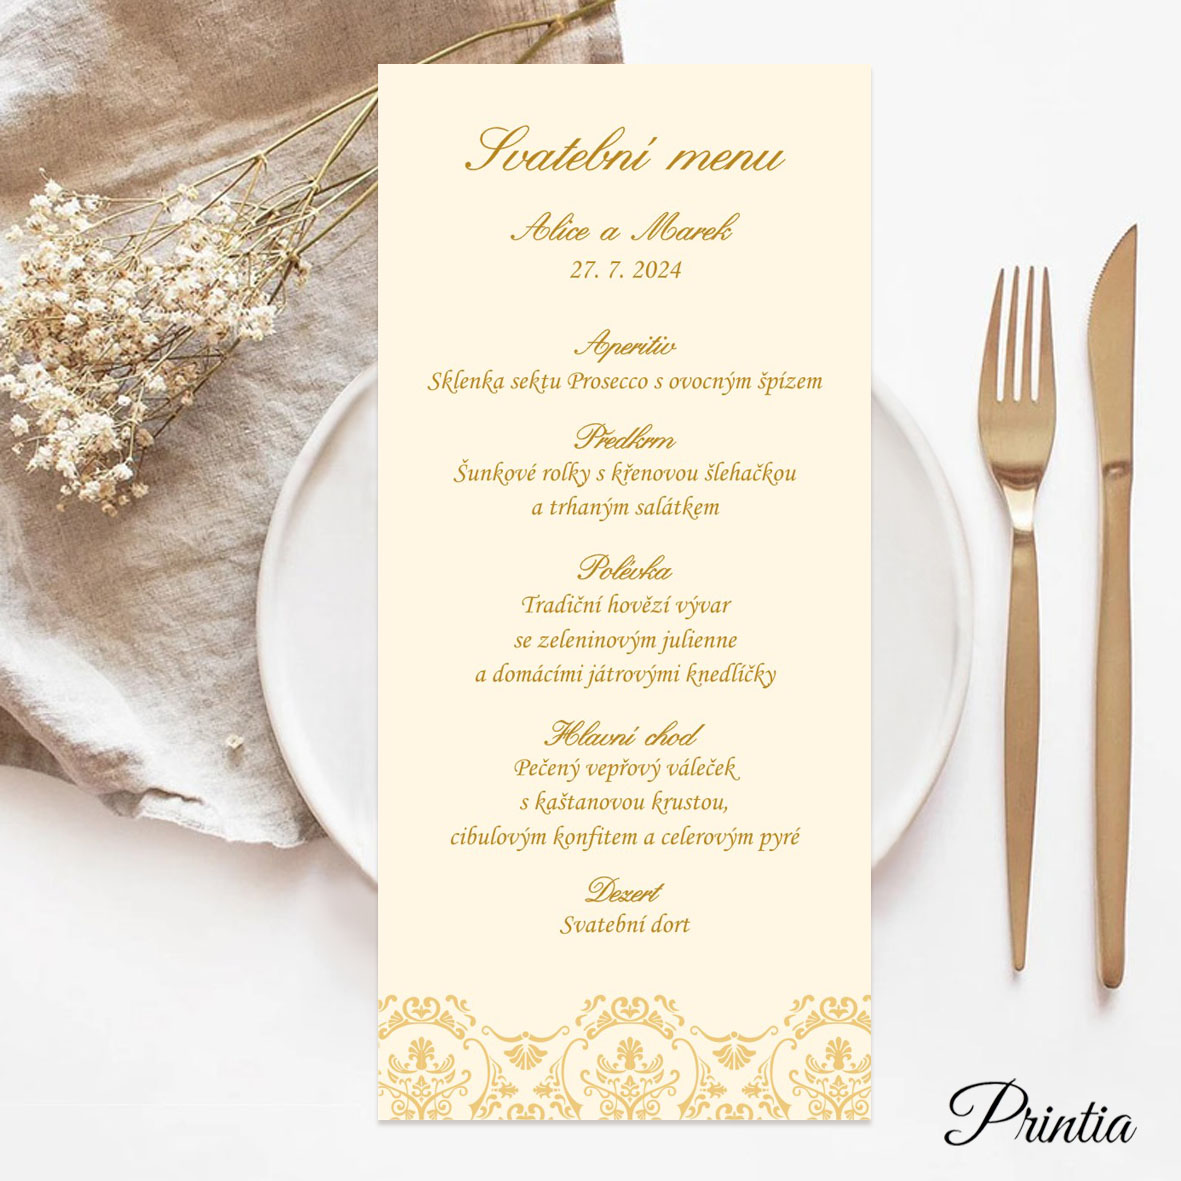 Wedding menu with printed chateau pattern